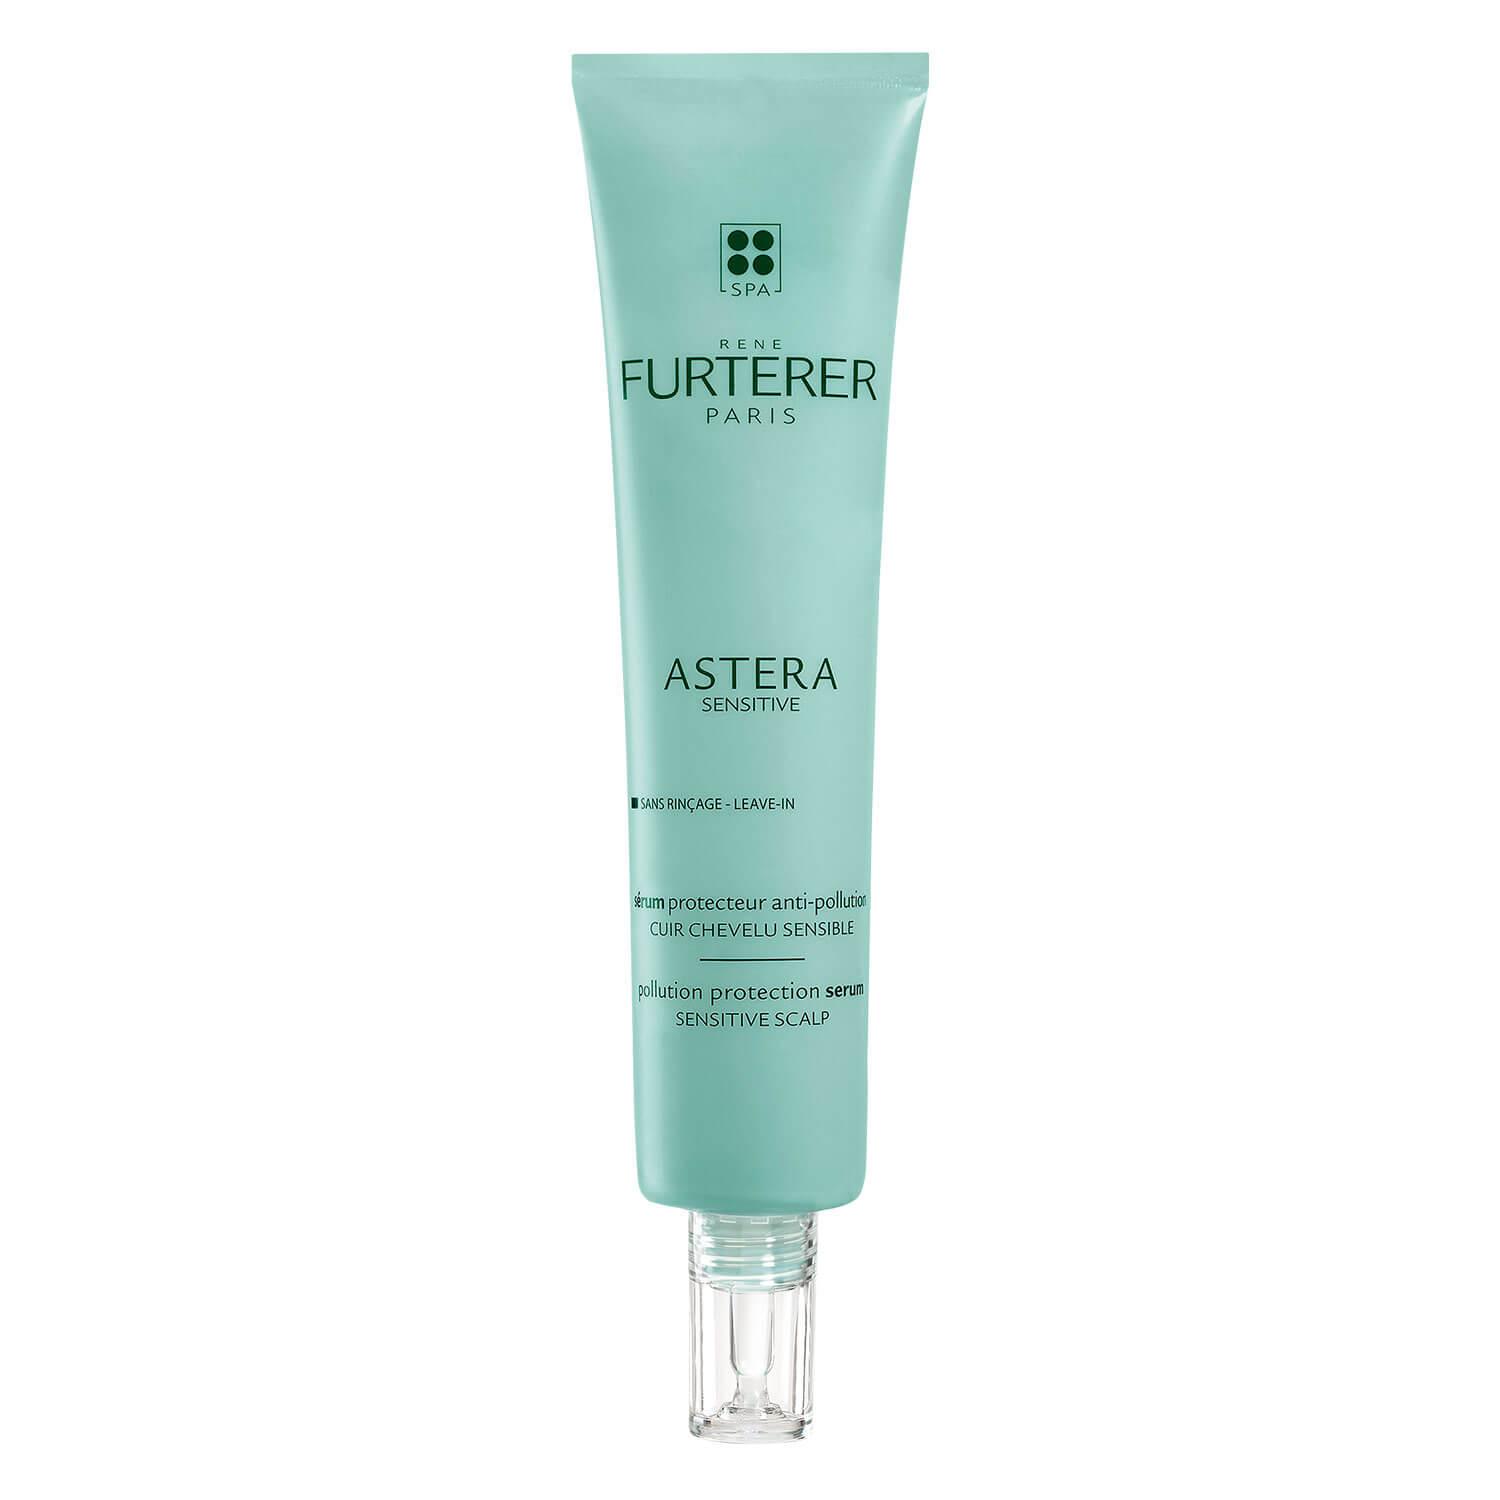 Astera Sensitive - Pollution Protection Serum